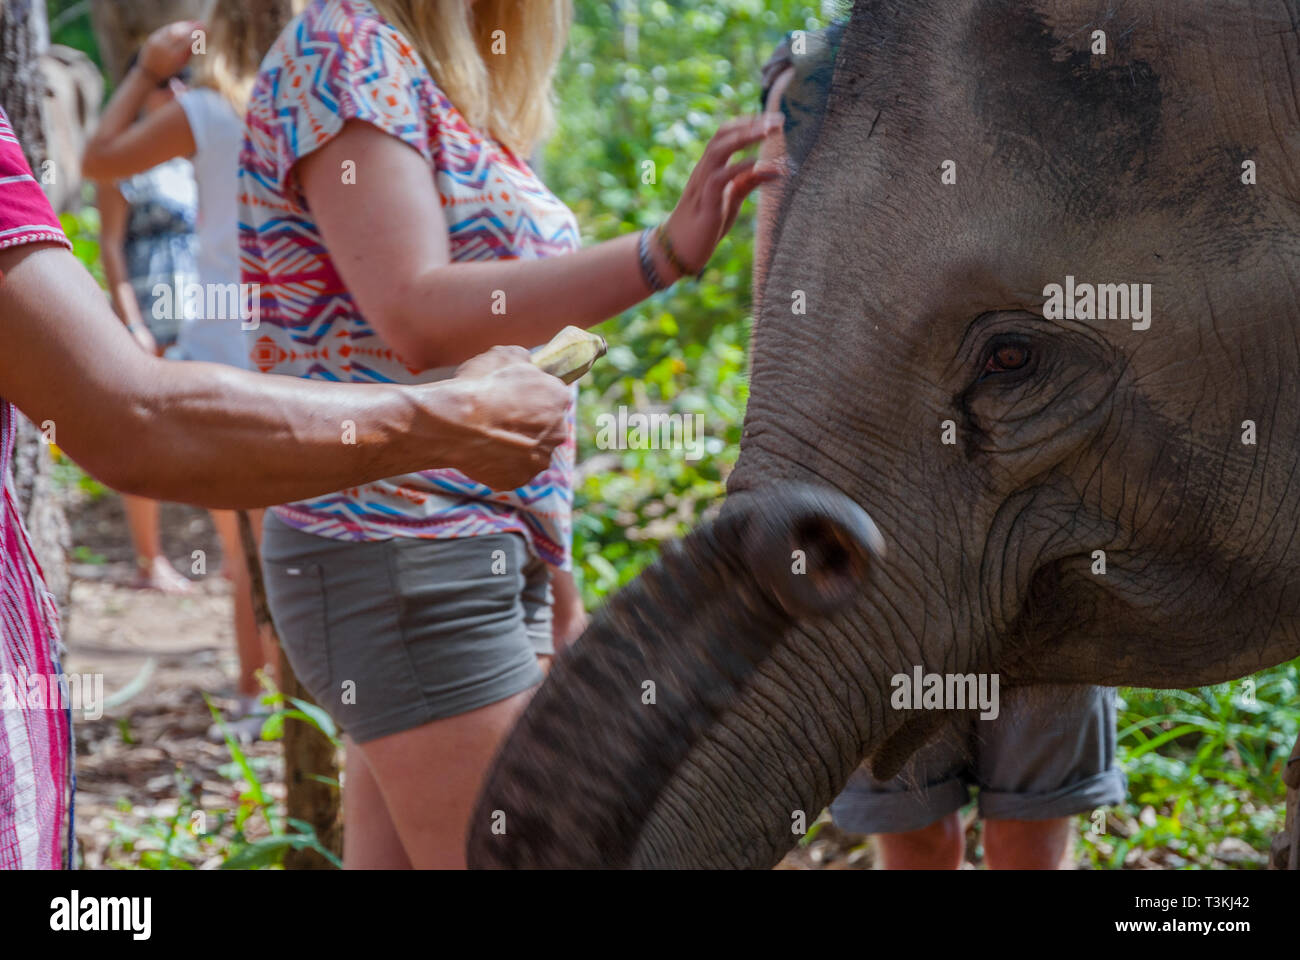 Chiang Mai, Thailand - Nov 2015: Group of women feeding elephant with bananas in elephant sanctuary, Thailand Stock Photo